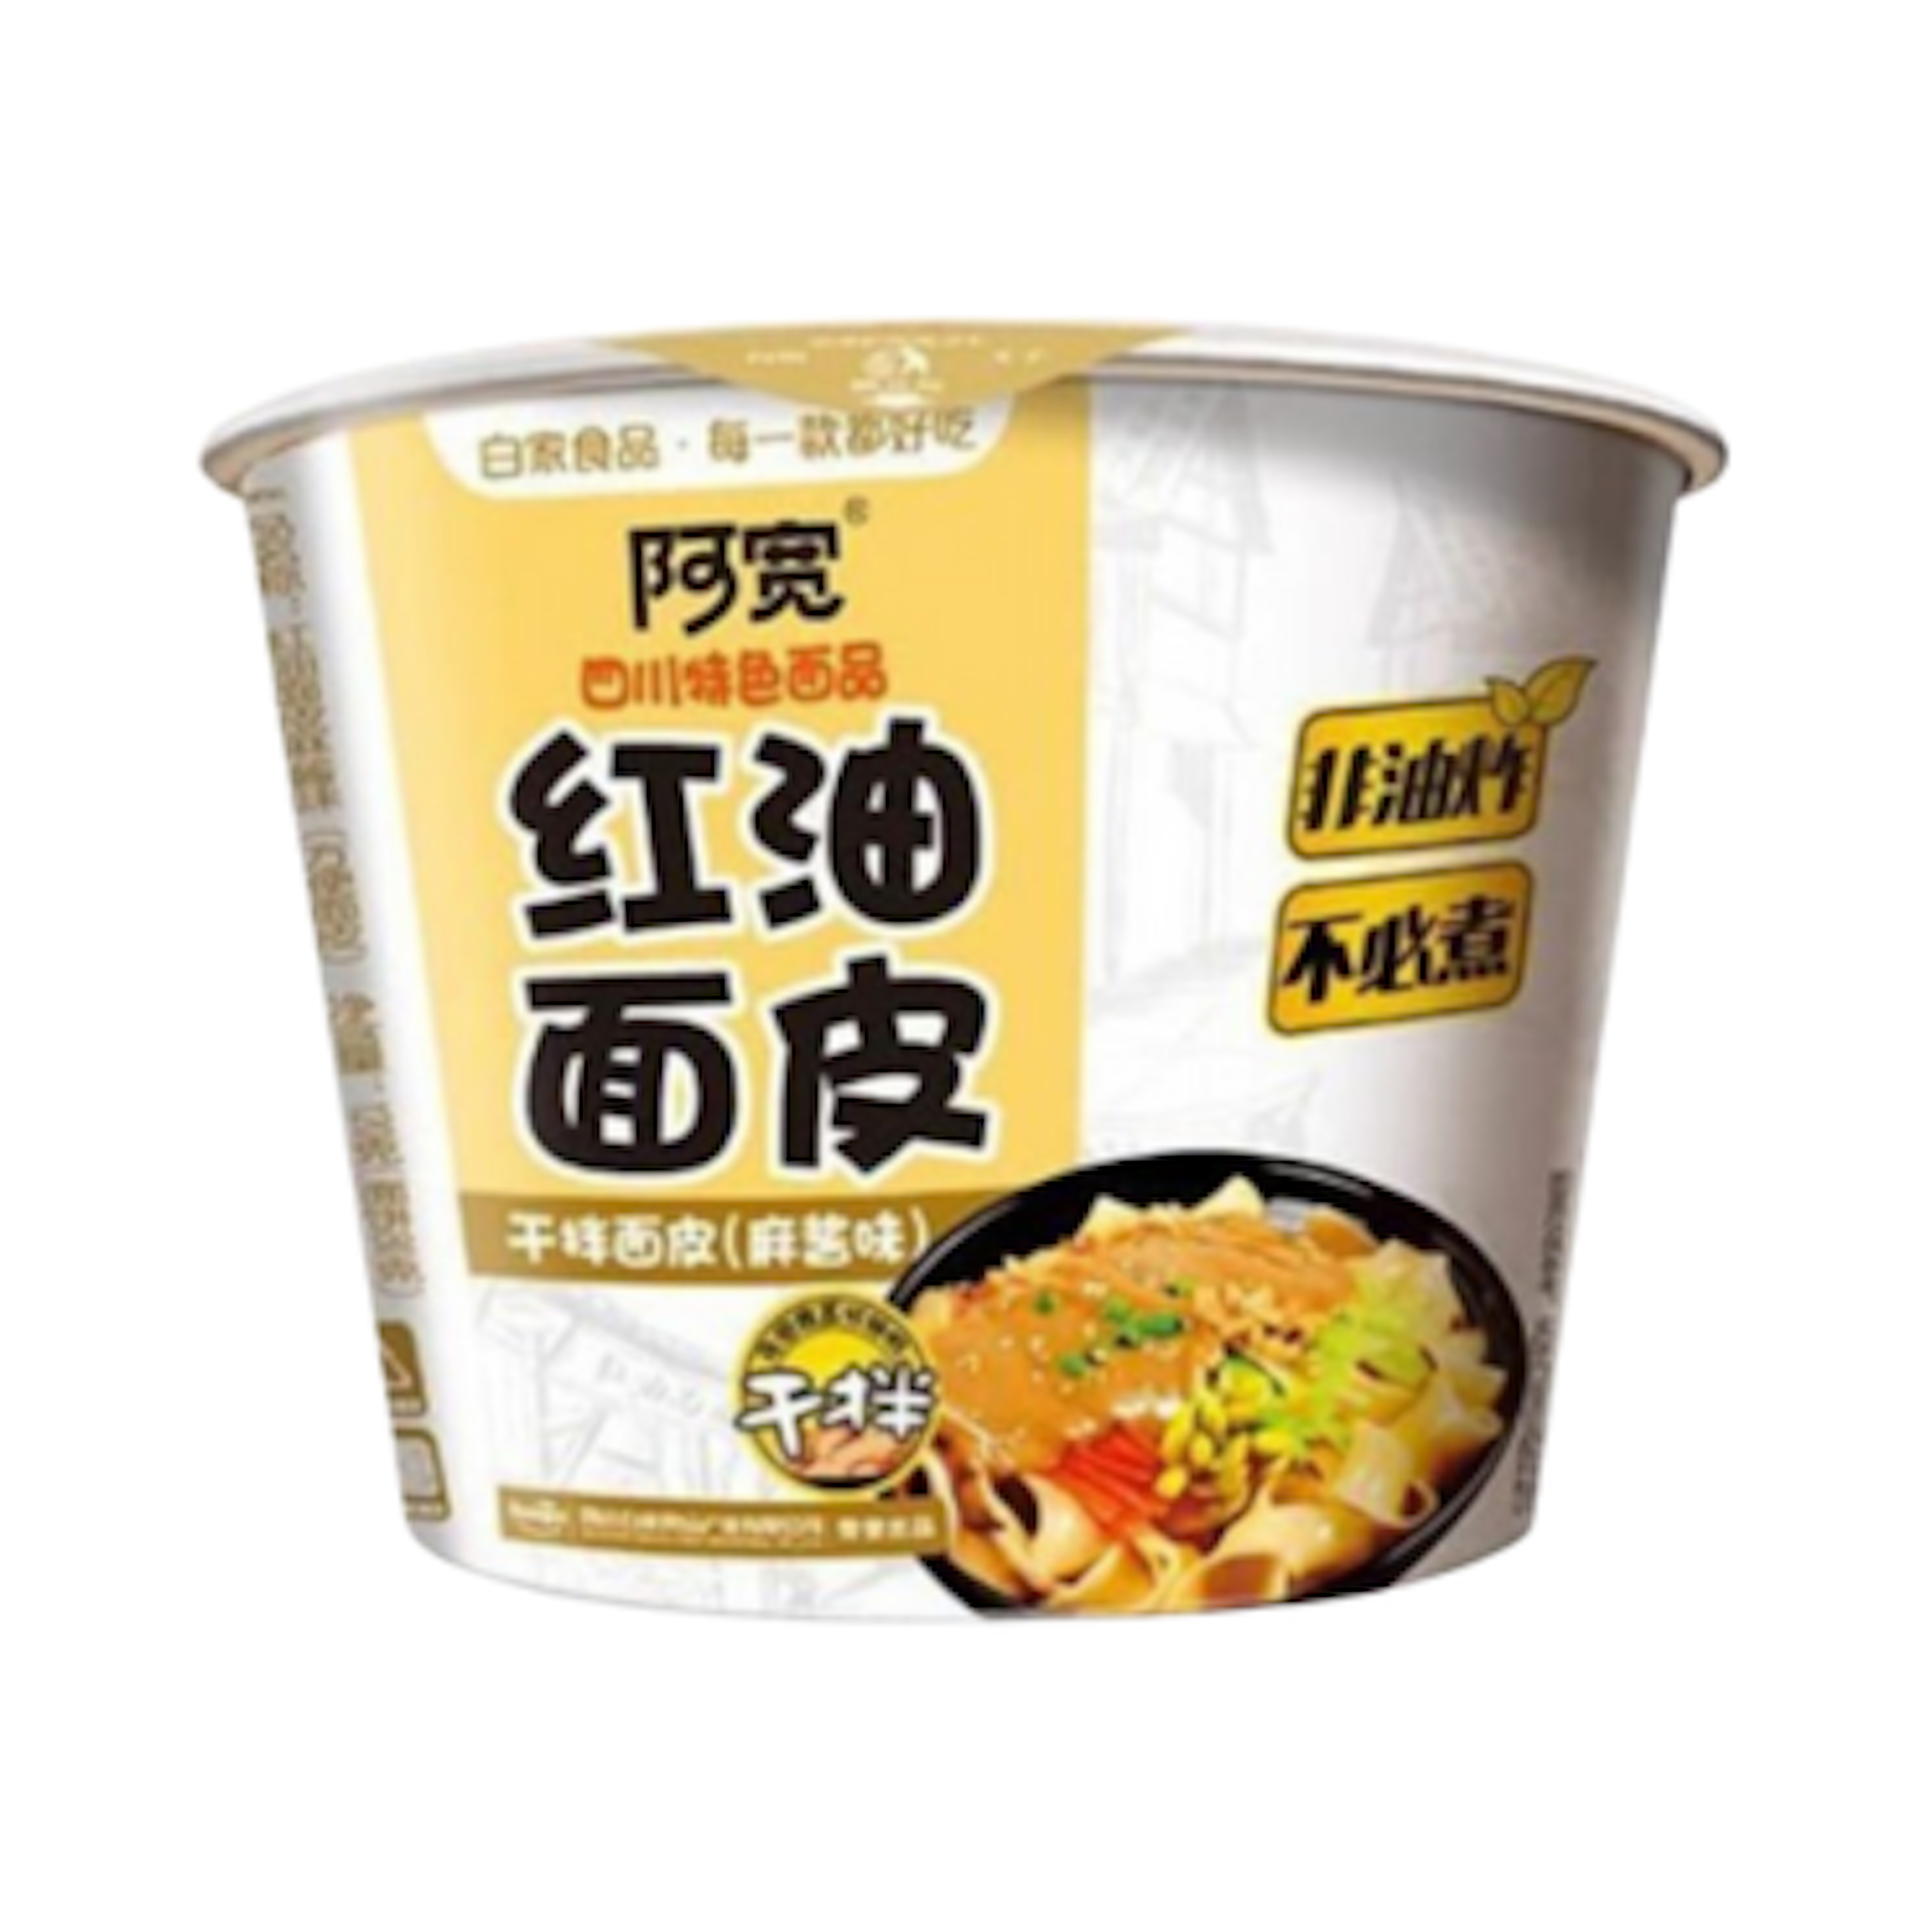 Baijia A-Kuan Broad Noodle Sesam Ramen Cup - Aromatische und breite Nudeln mit Sesam, 105g